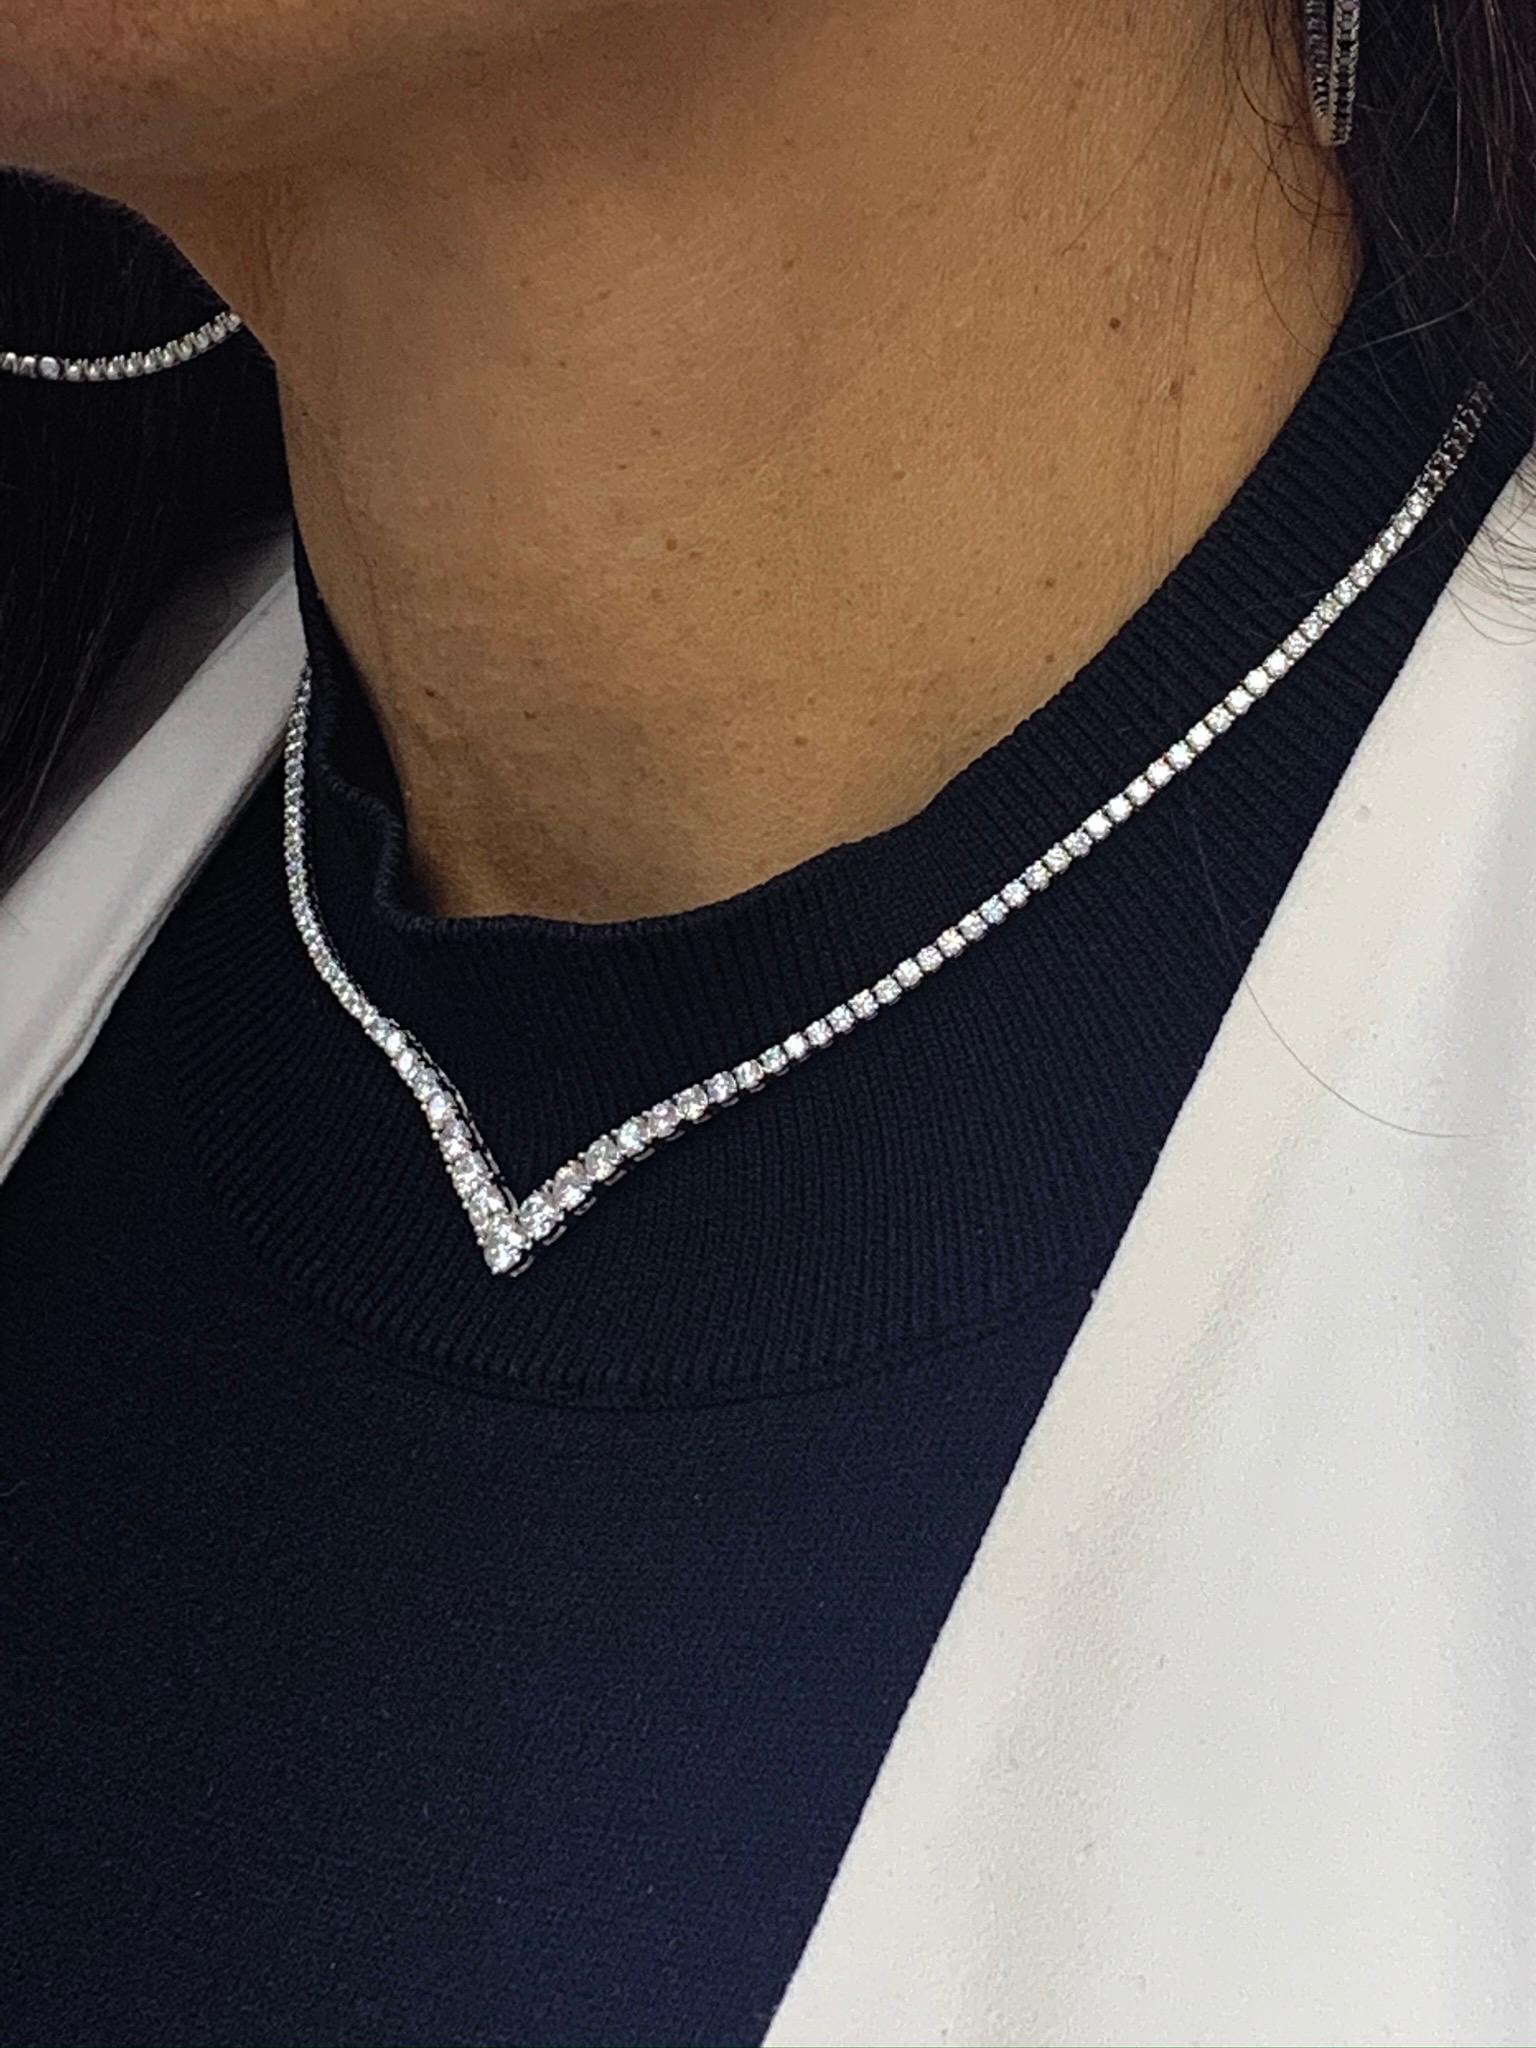 Round Cut 5.05 Carat Round Brilliant Diamond Graduating Necklace in 14K White Gold For Sale